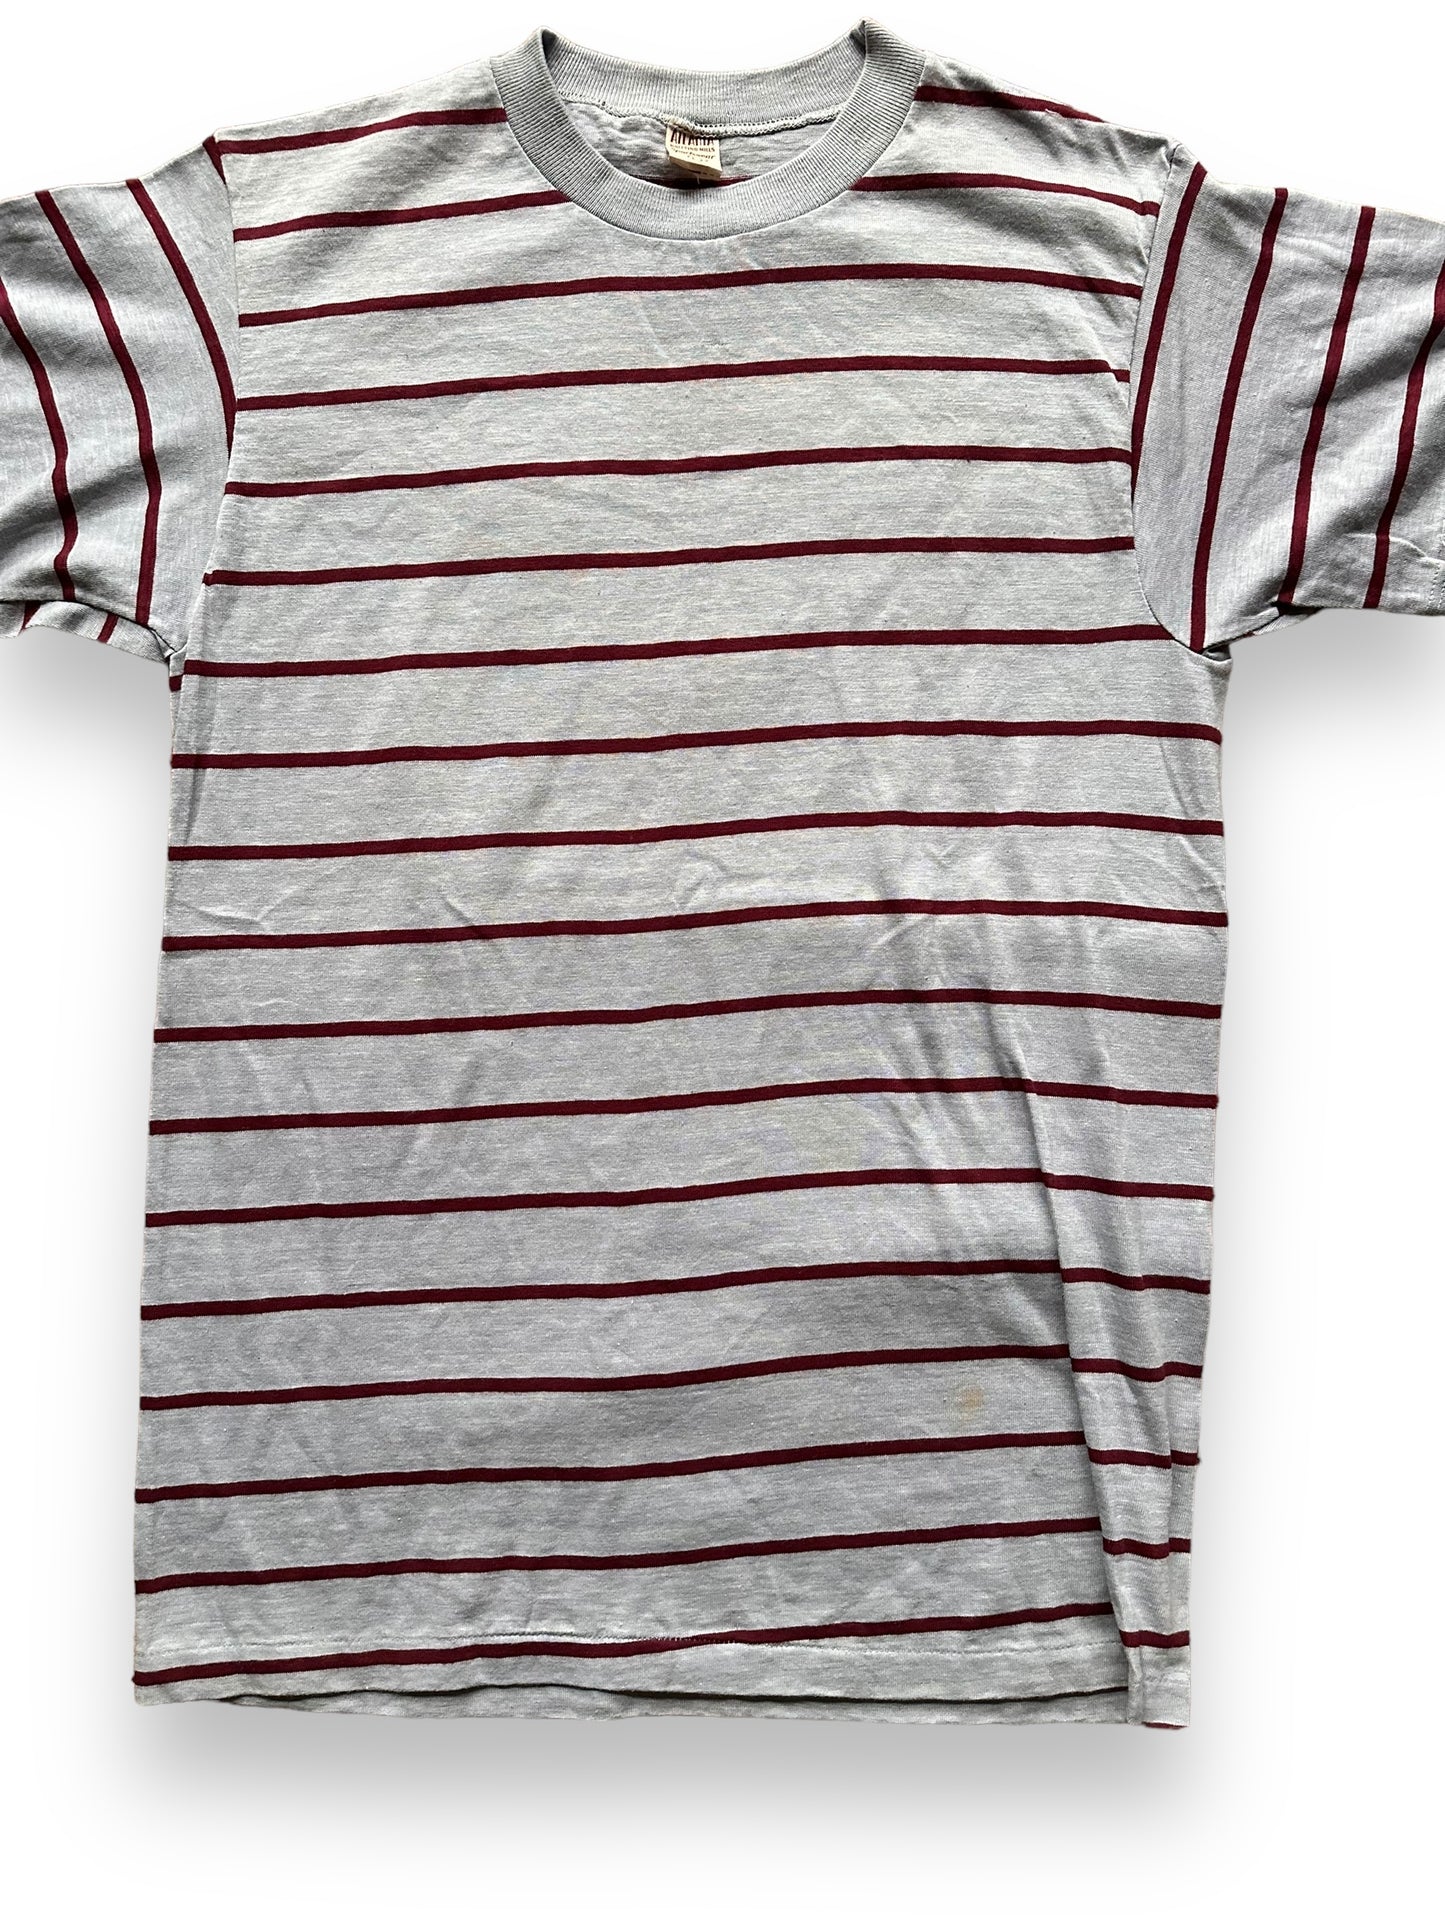 Front Detail of Vintage Atlanta Knitting Mills Striped Shirt SZ L | Vintage Striped Shirt Seattle | Barn Owl Vintage Seattle